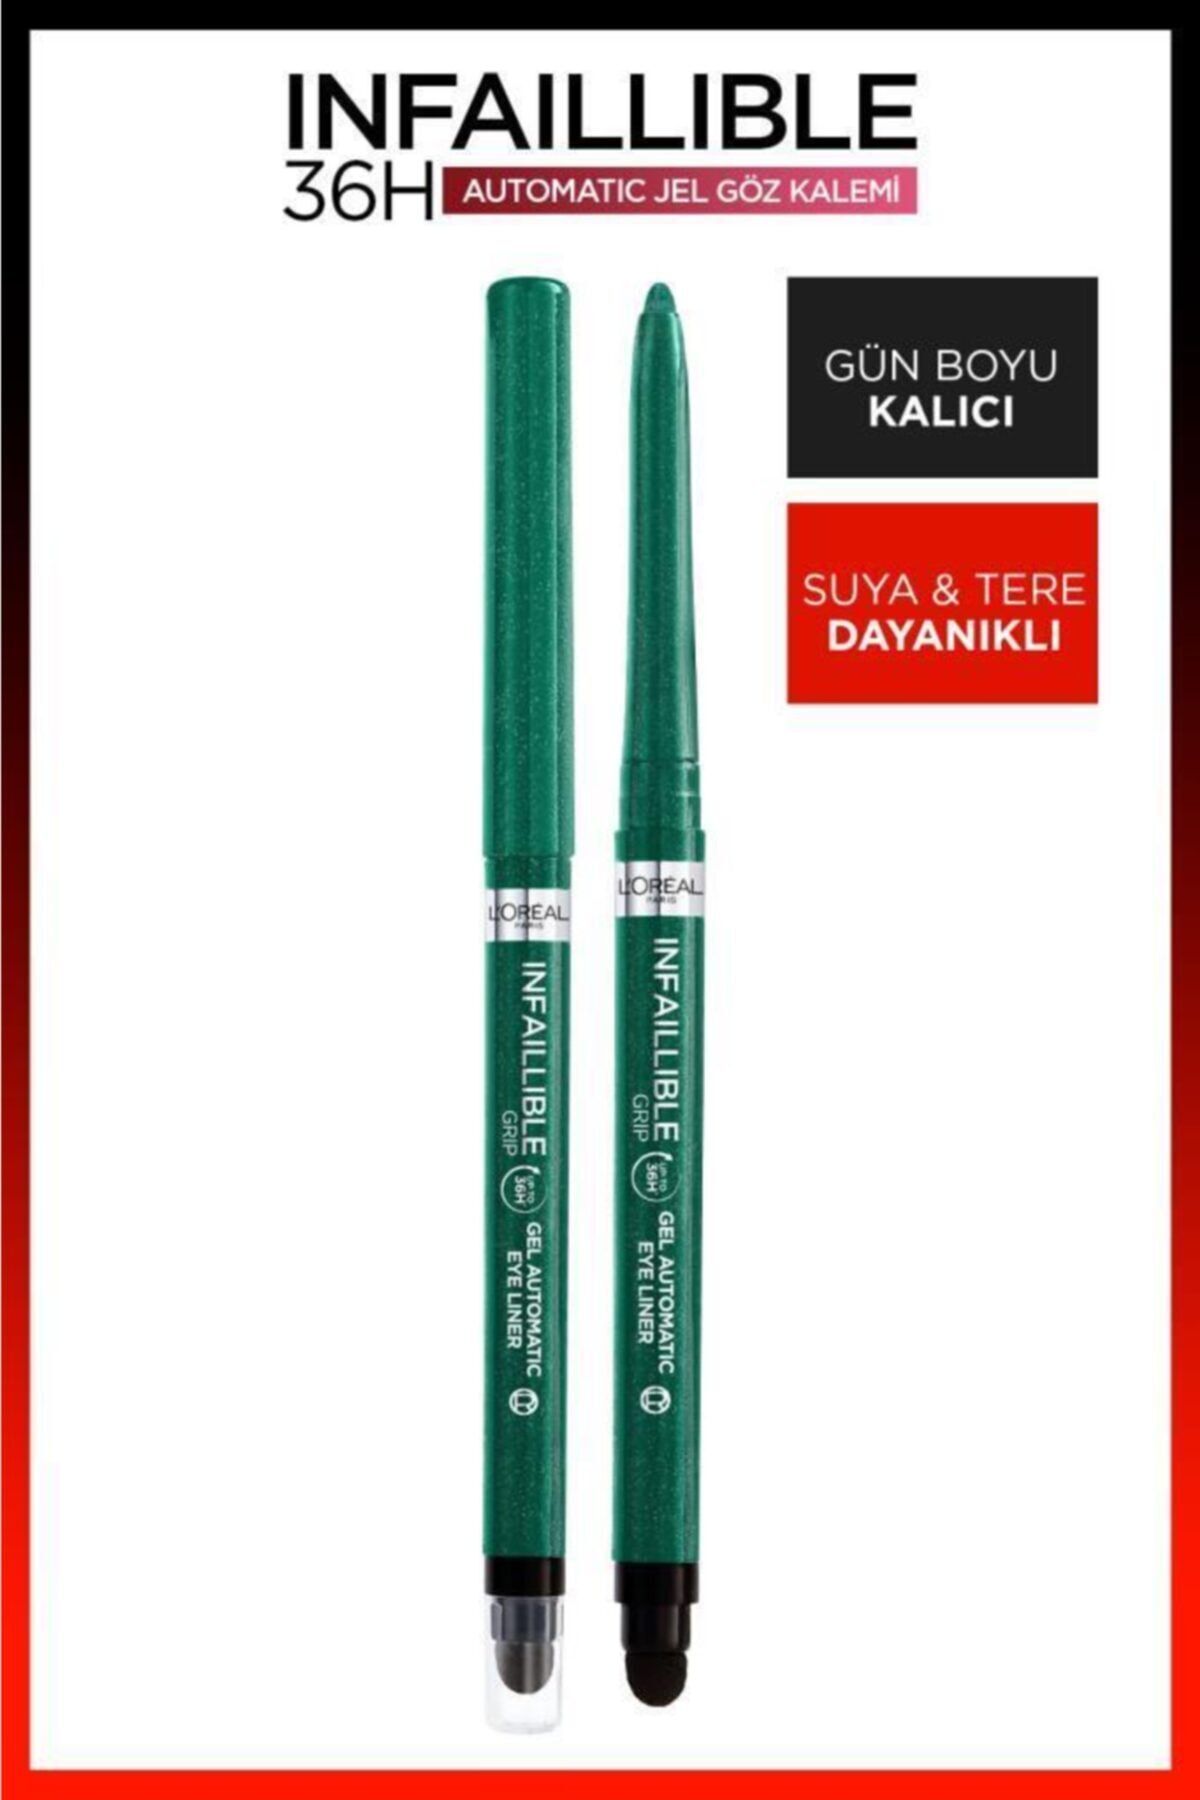 L'Oreal Paris مداد چشم ژلی اتوماتیک دو طرفه Infailable ماندگاری 36ساعته رنگ سبز